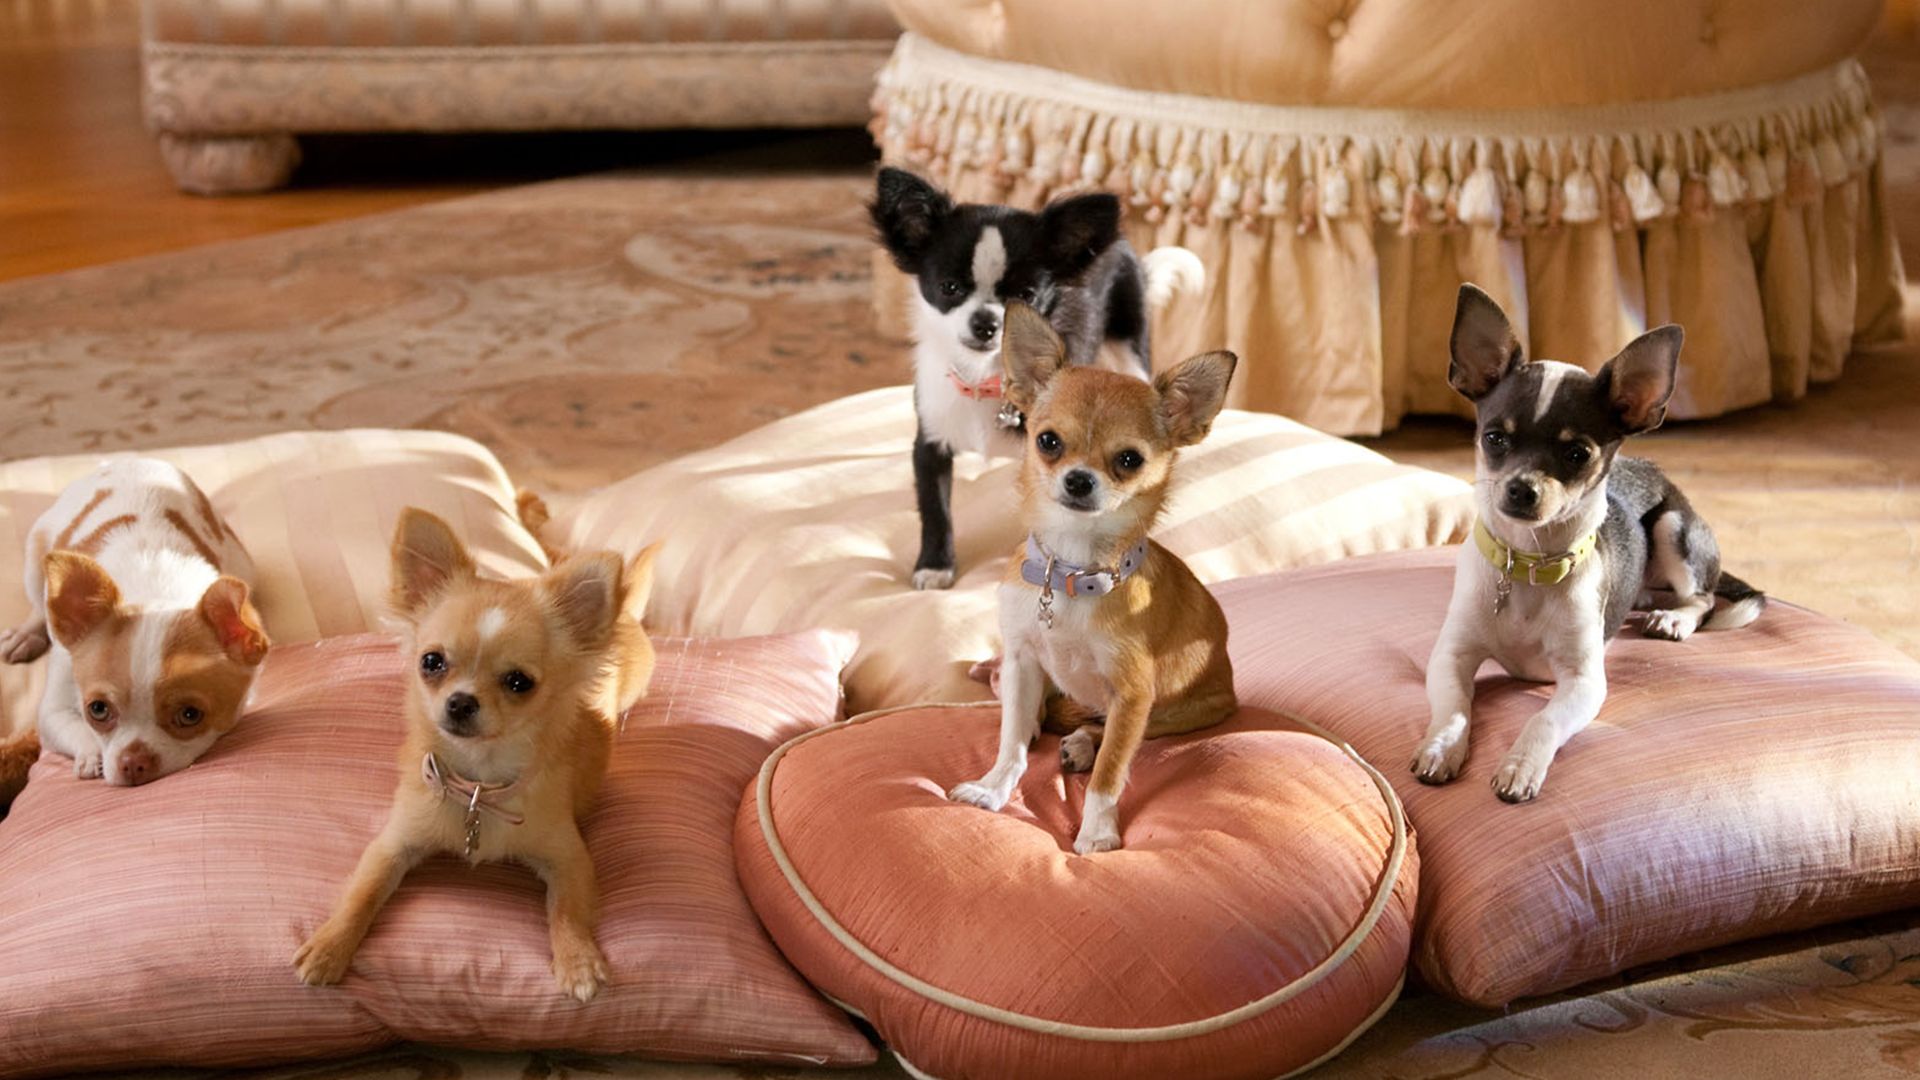 Watch Beverly Hills Chihuahua 2. Full Movie. Disney+